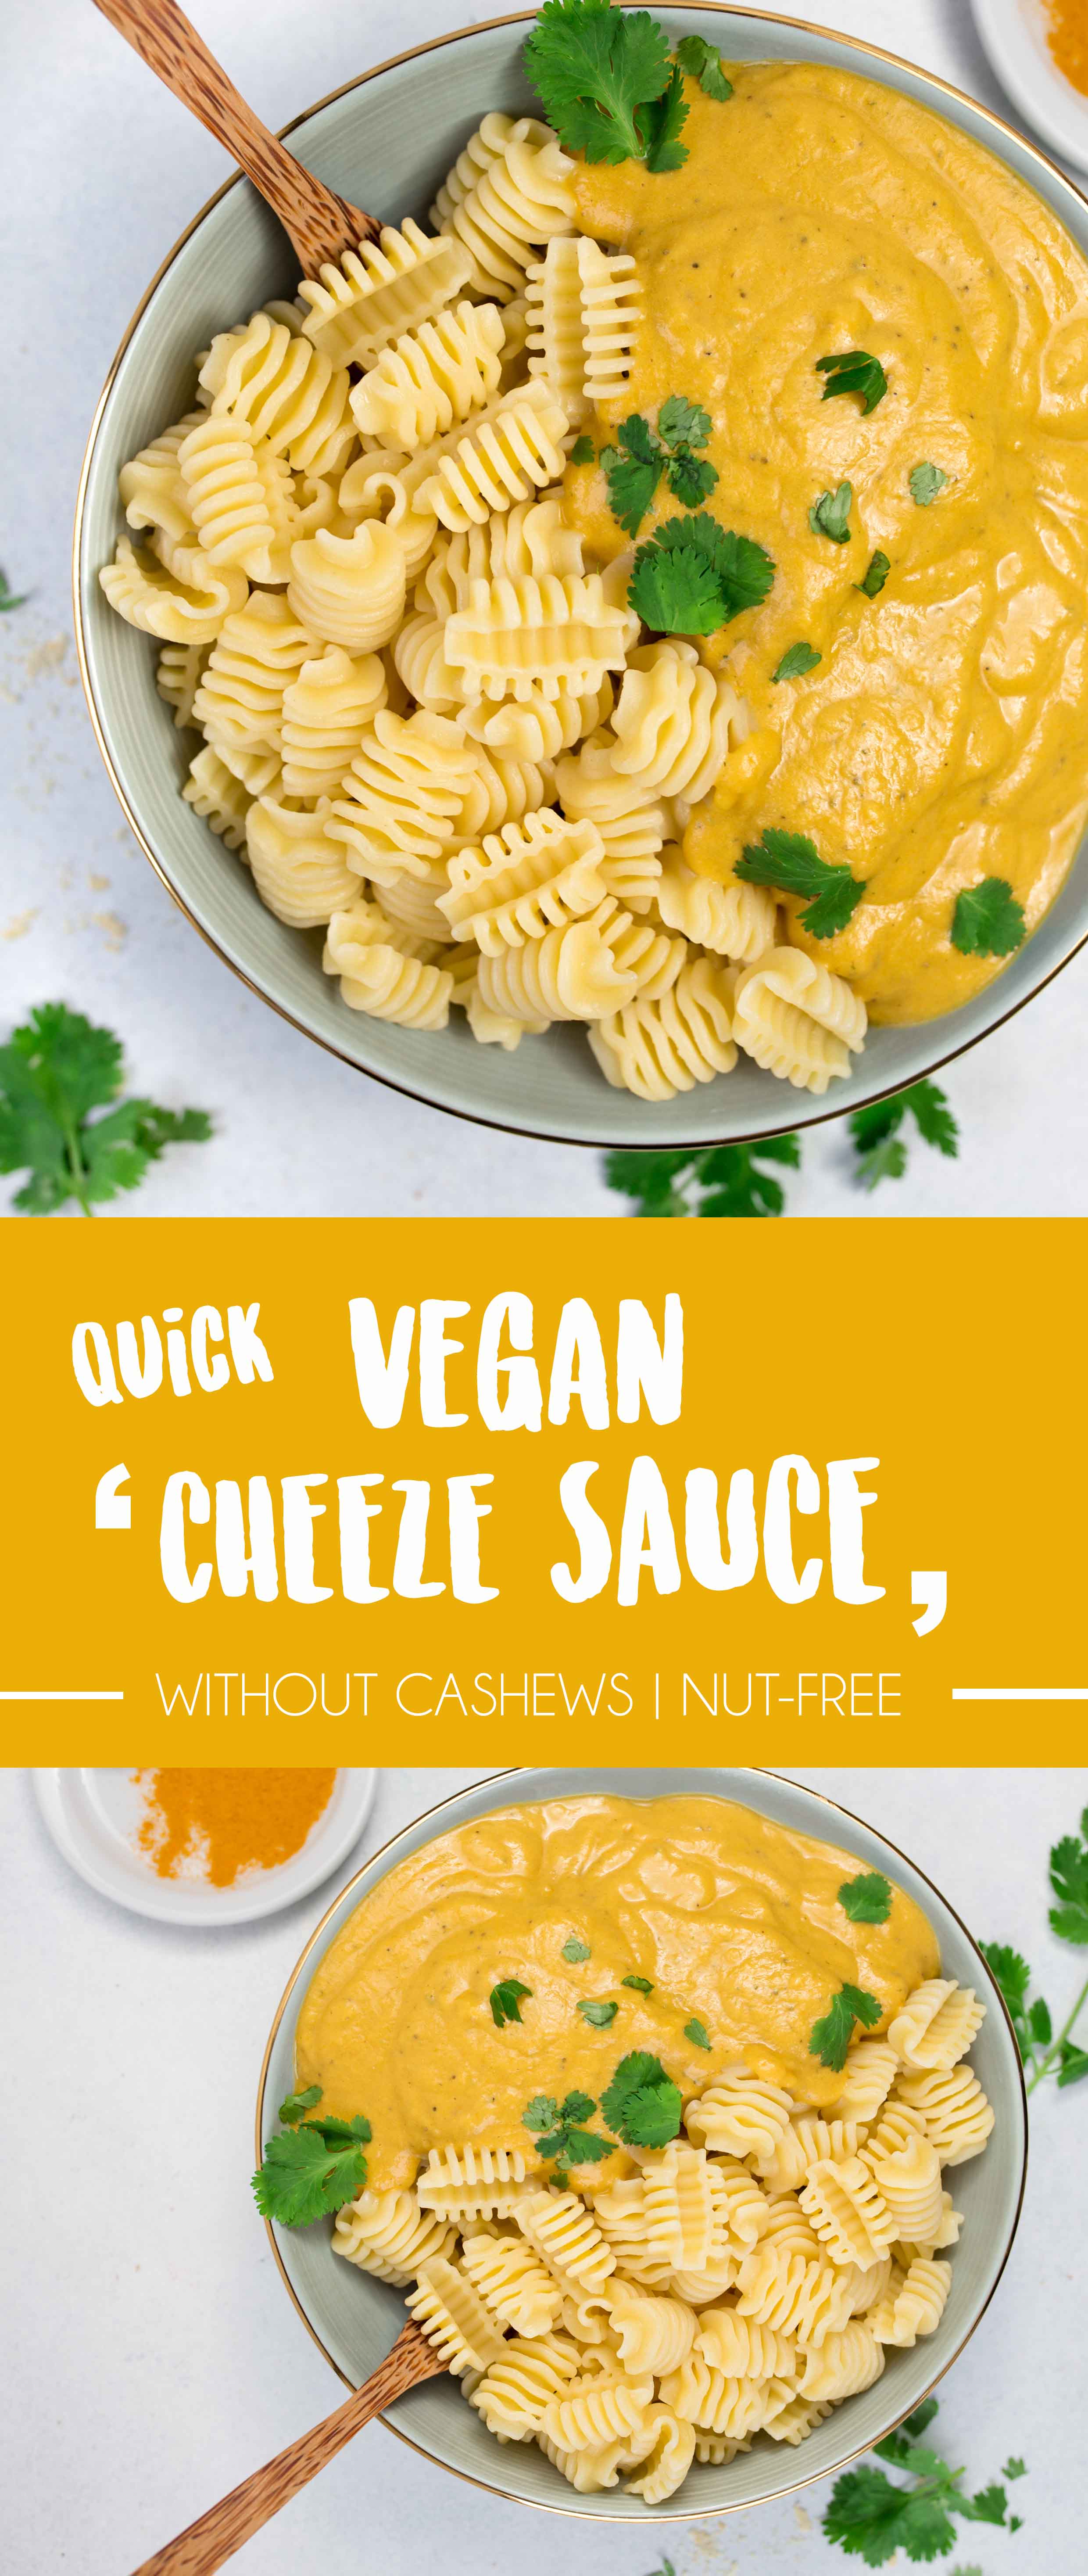 Easy Vegan Lowfat "Cheeze" Sauce {super creamy without cashews!}